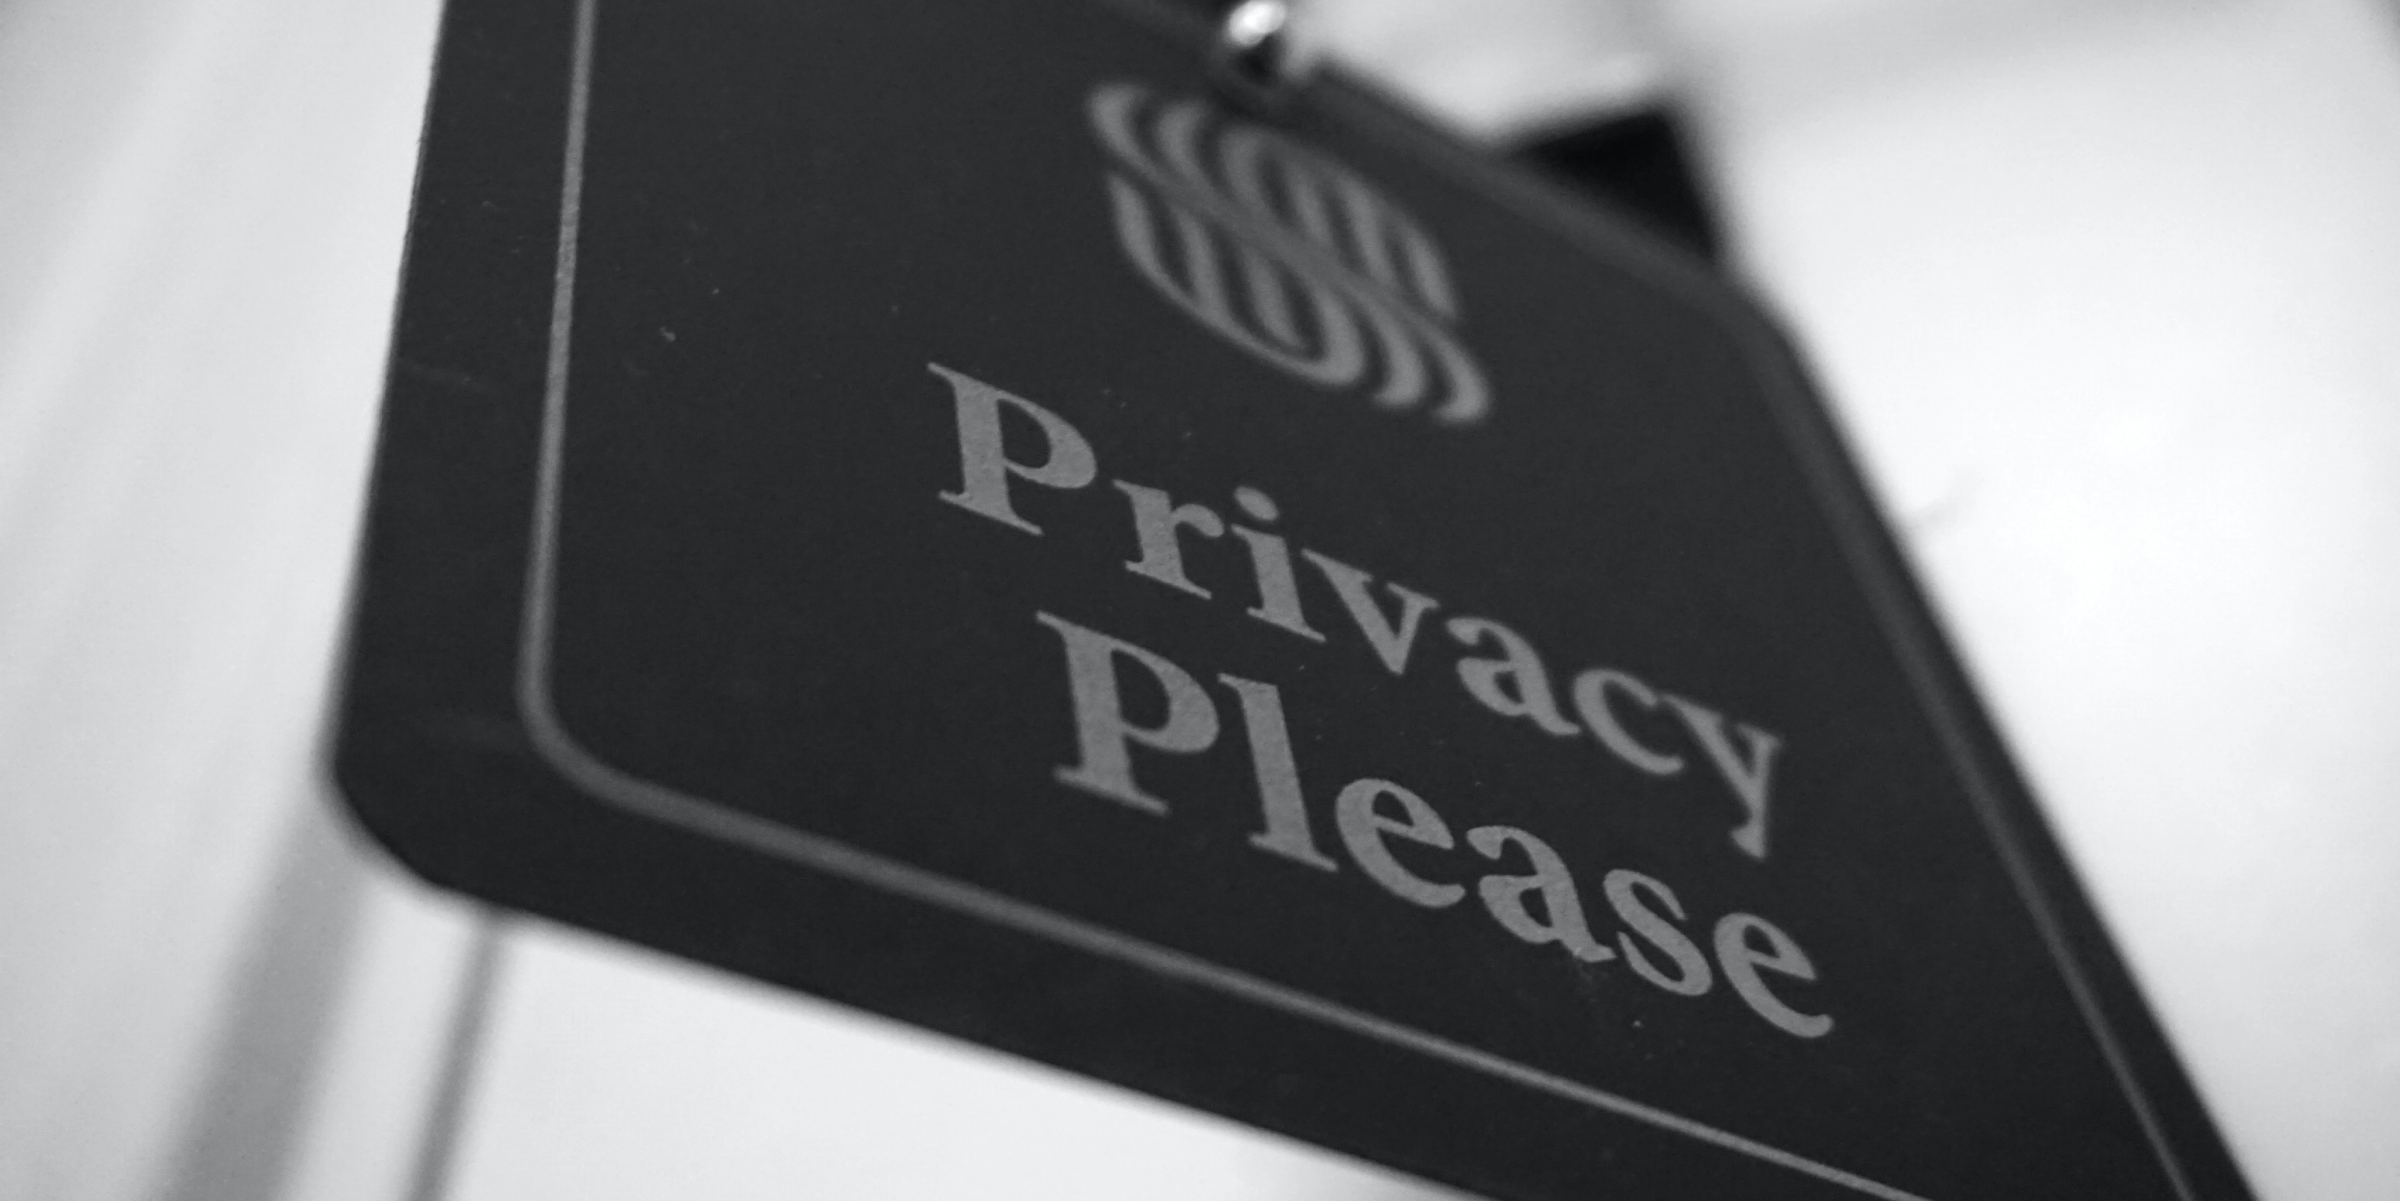 MWSoft Privacy Protector